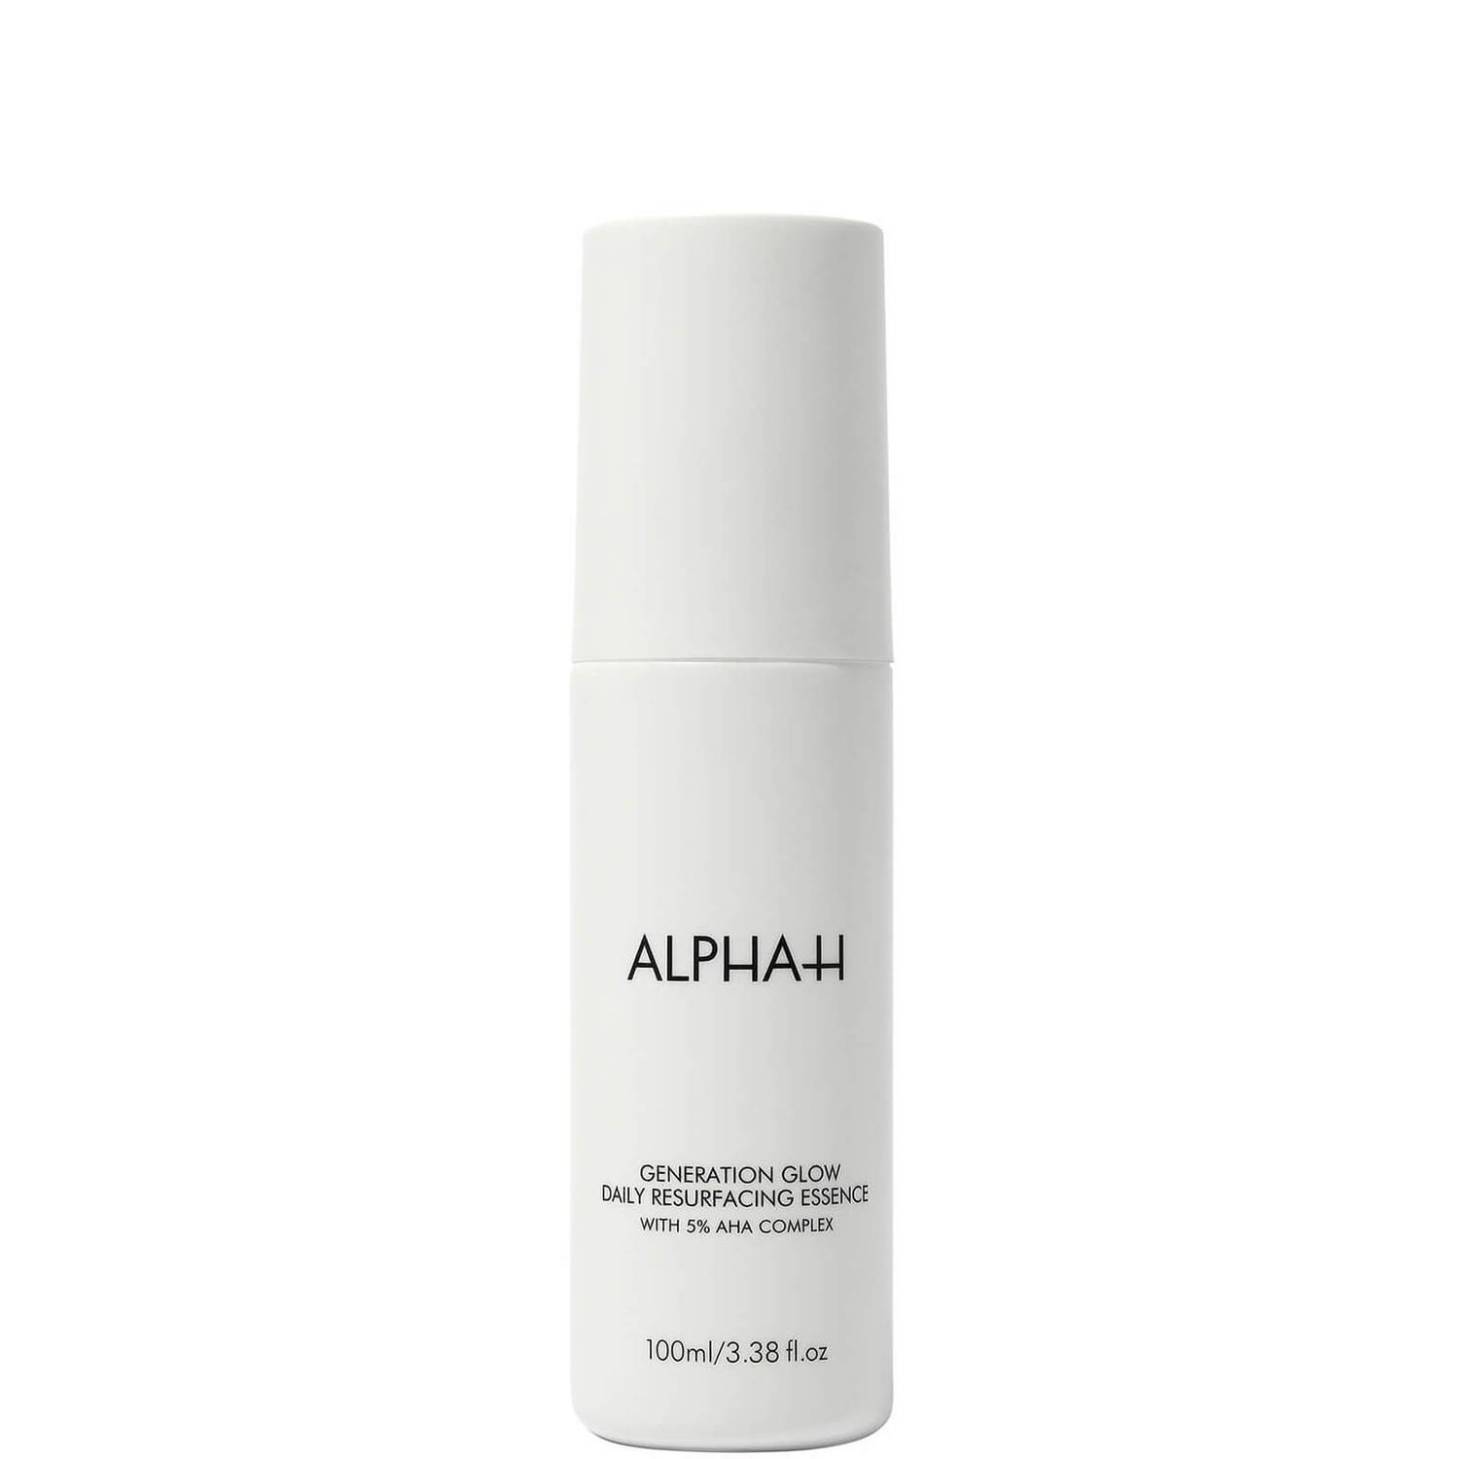 A bottle of alpha h generation glow essence exfoliator for sensitive skin